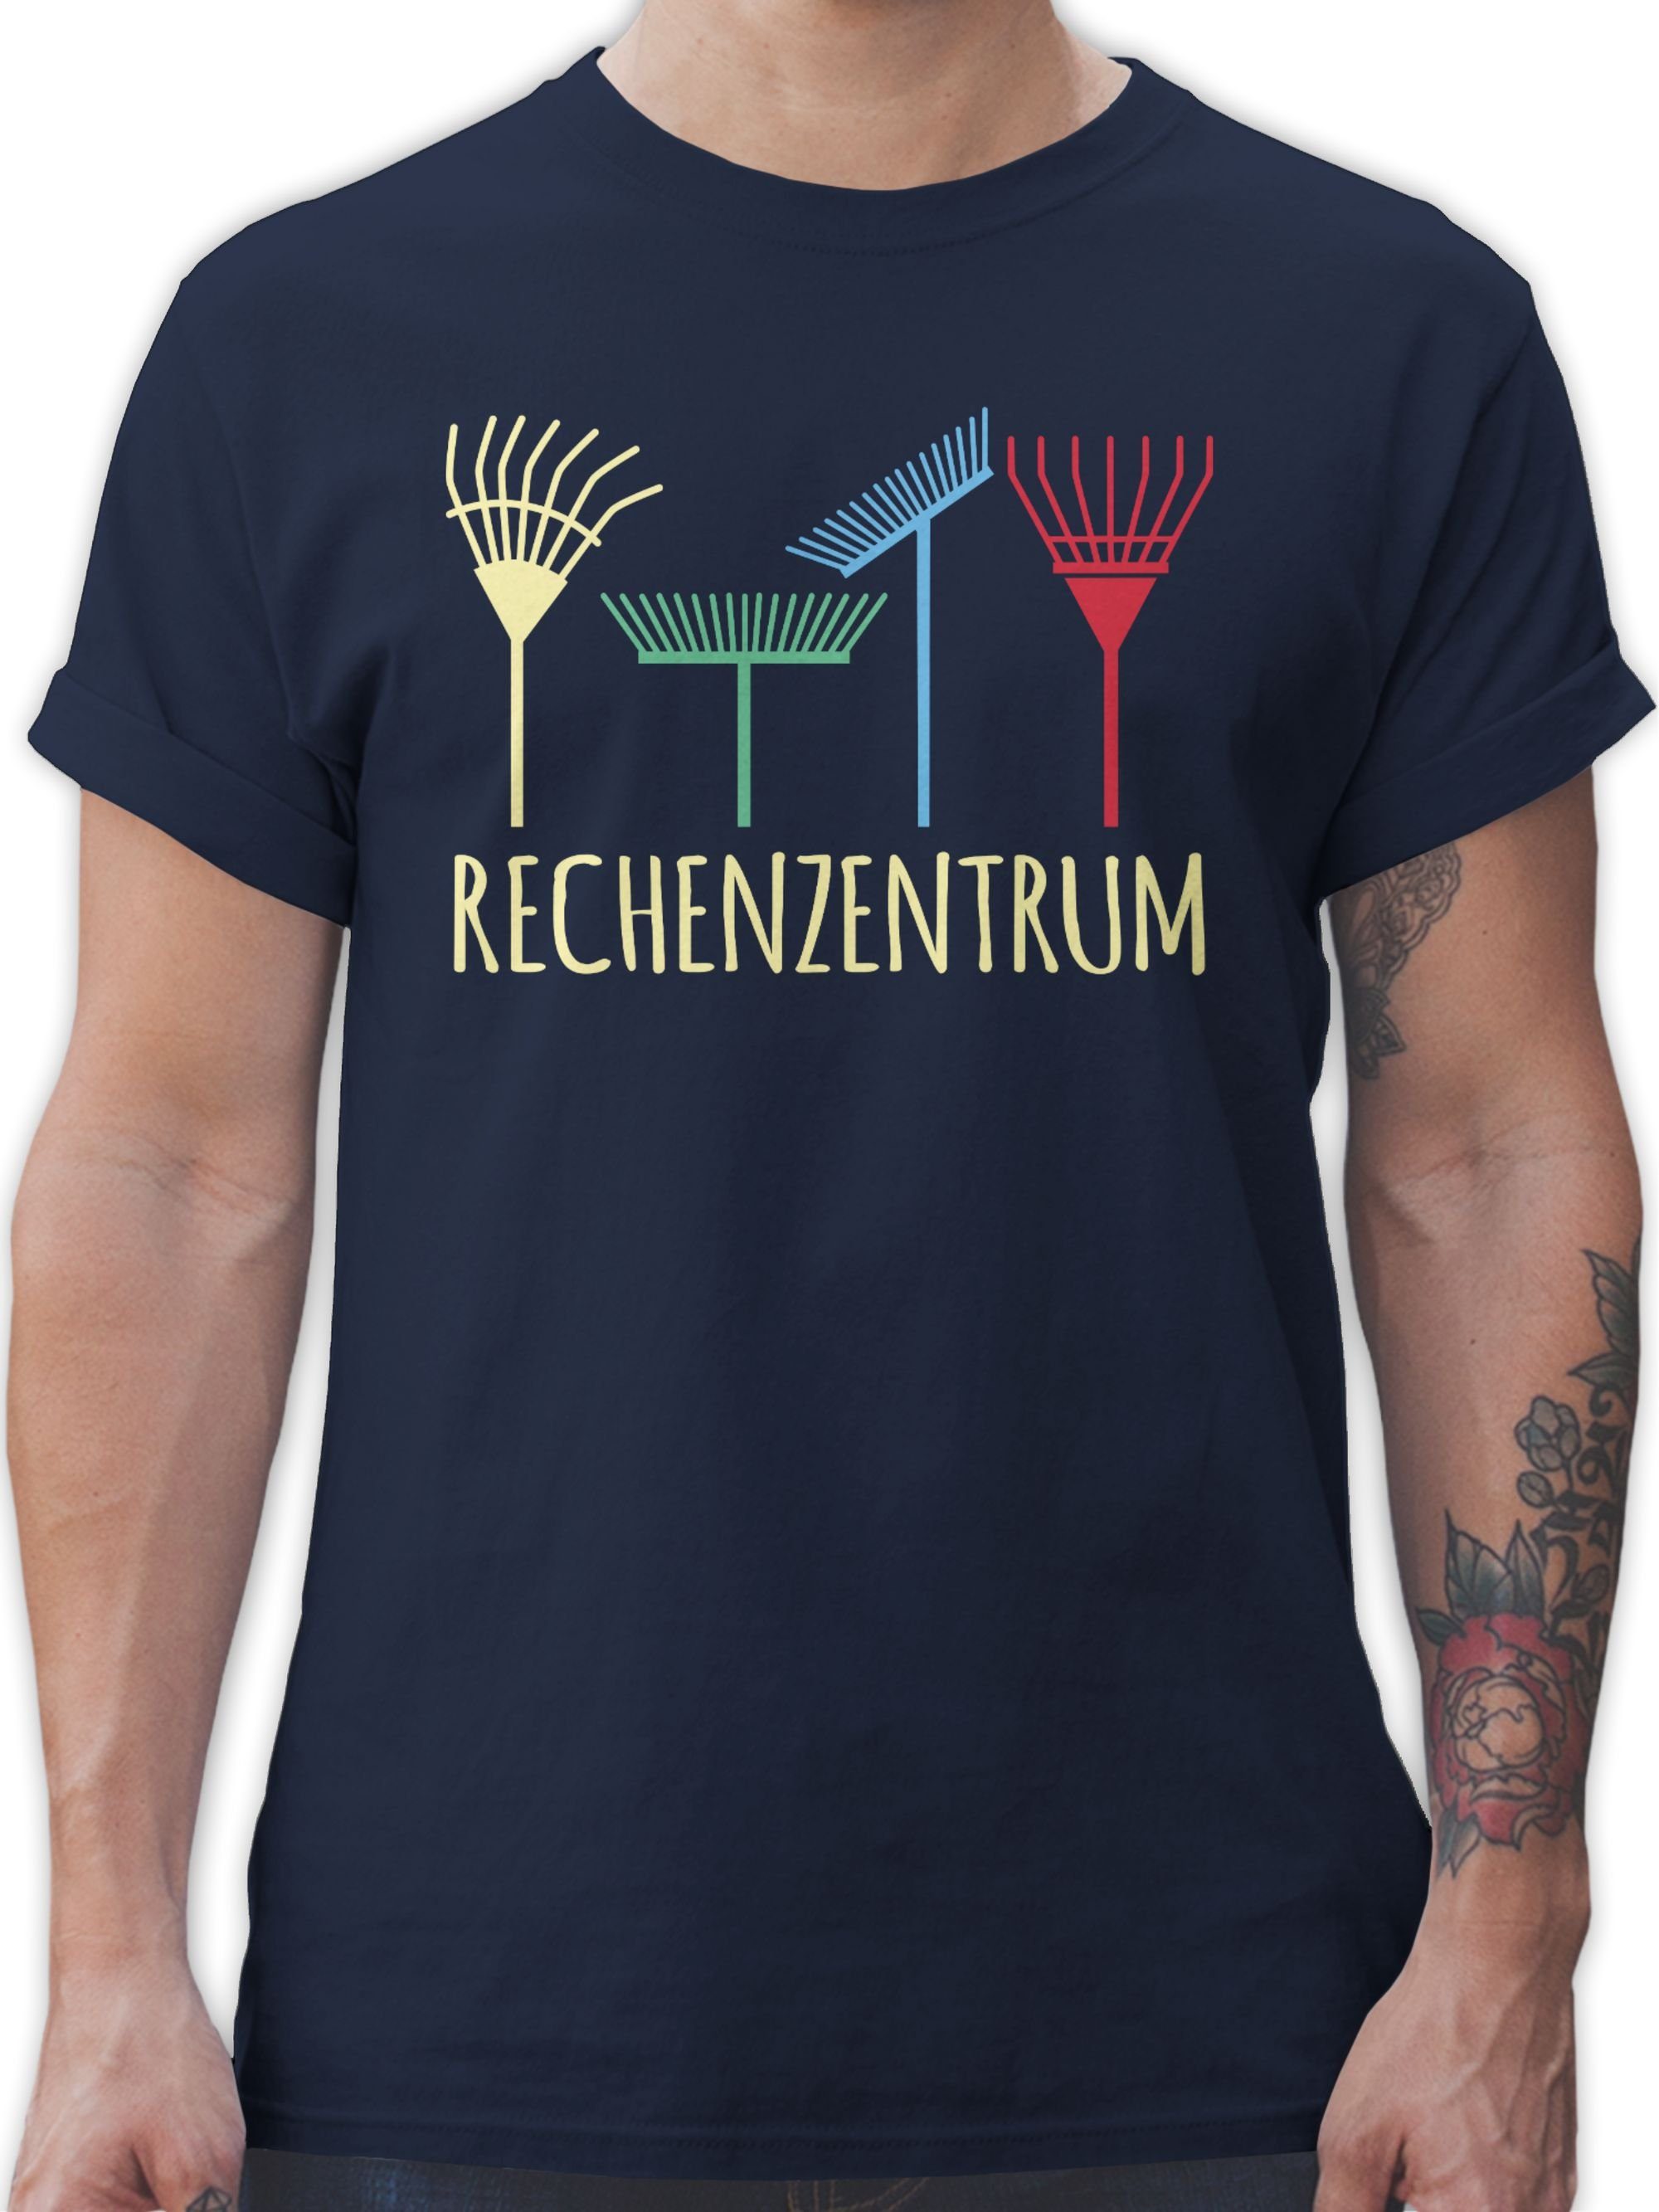 03 - Geschenkidee Gartenarbeit Shirtracer T-Shirt Blau Gärtner Geschenk Rechenzentrum Outfit Hobby Navy